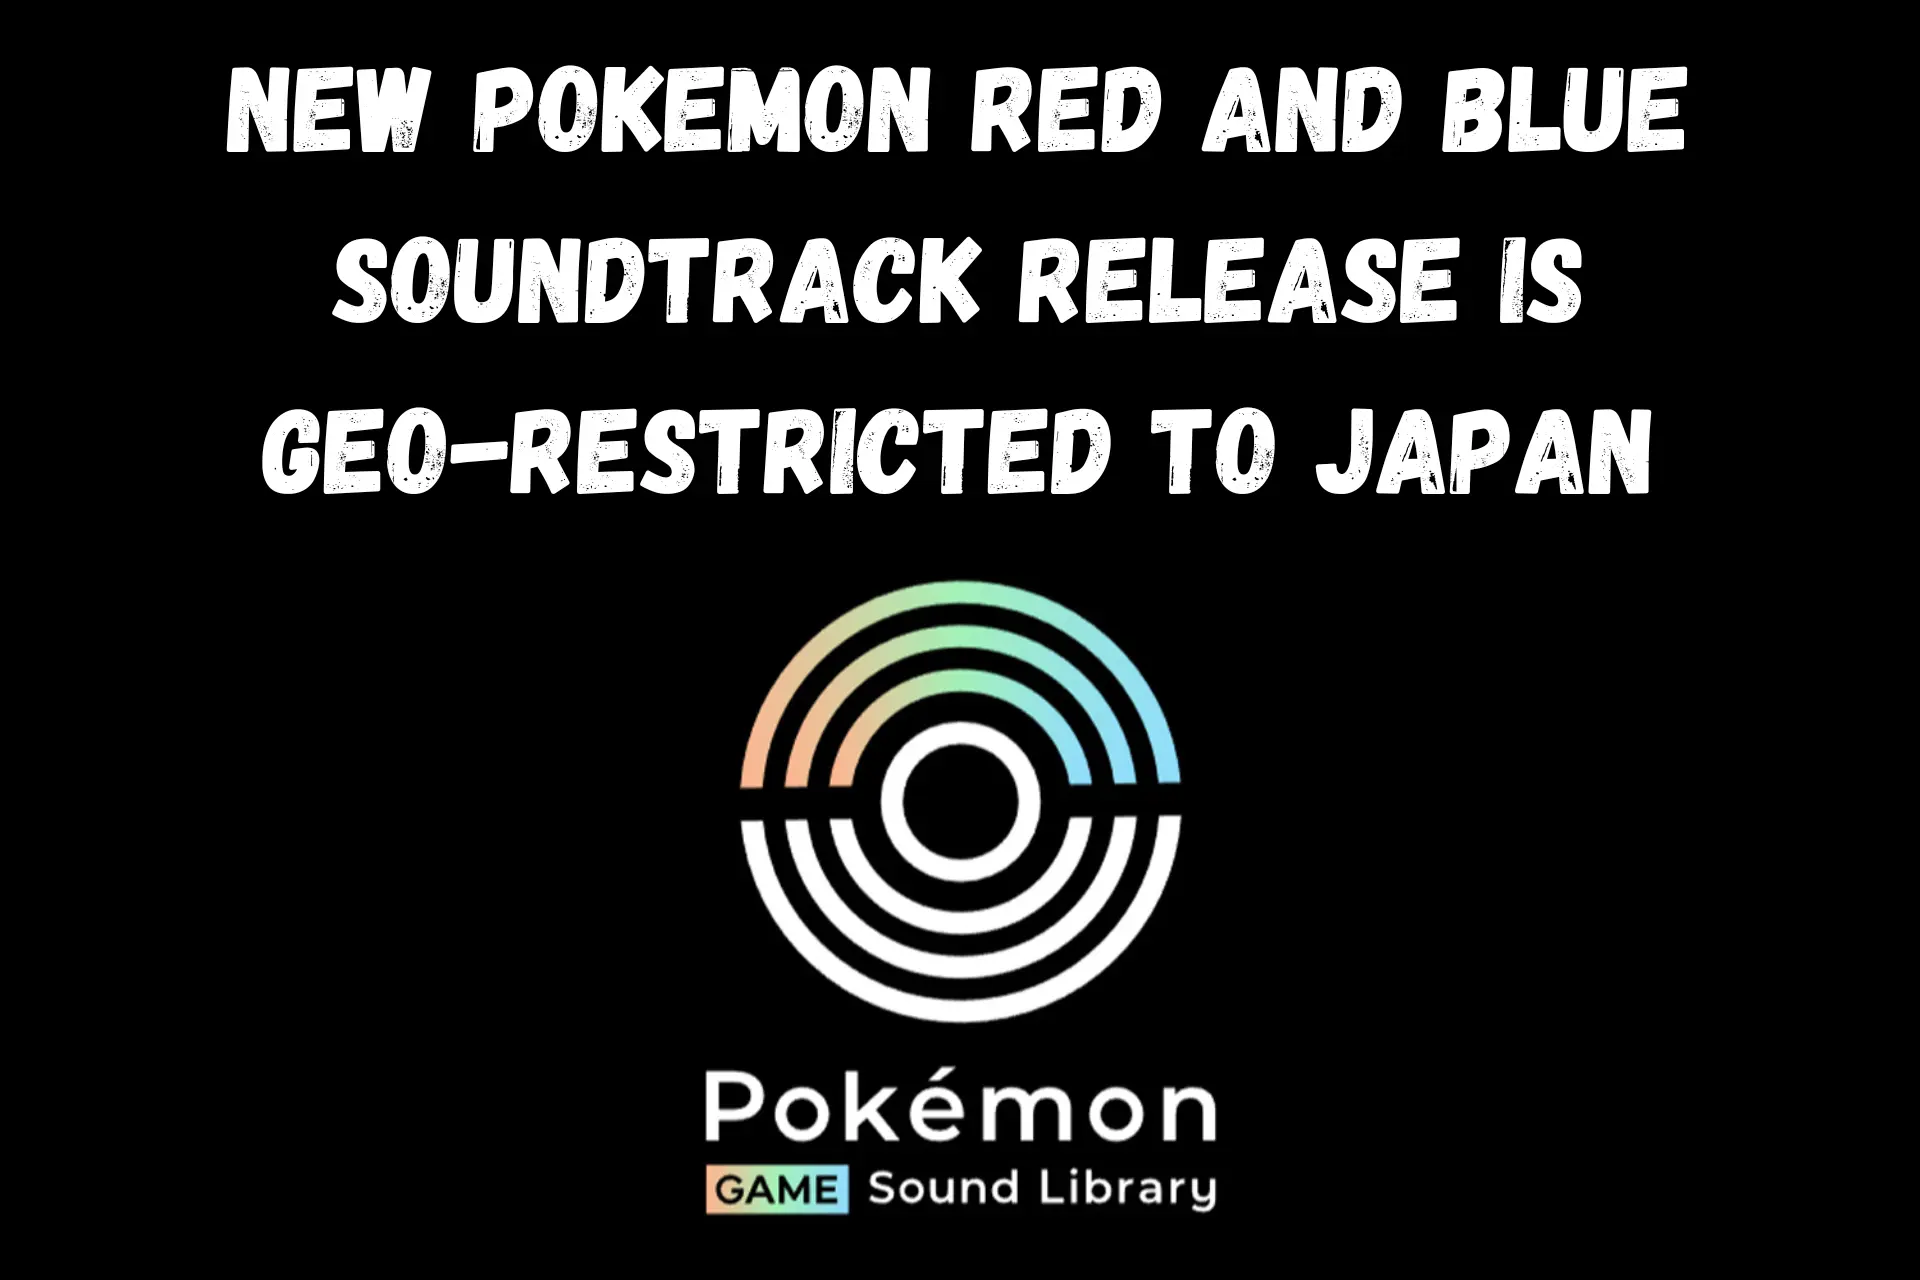 New Pokemon soundtrack is geo-restricted